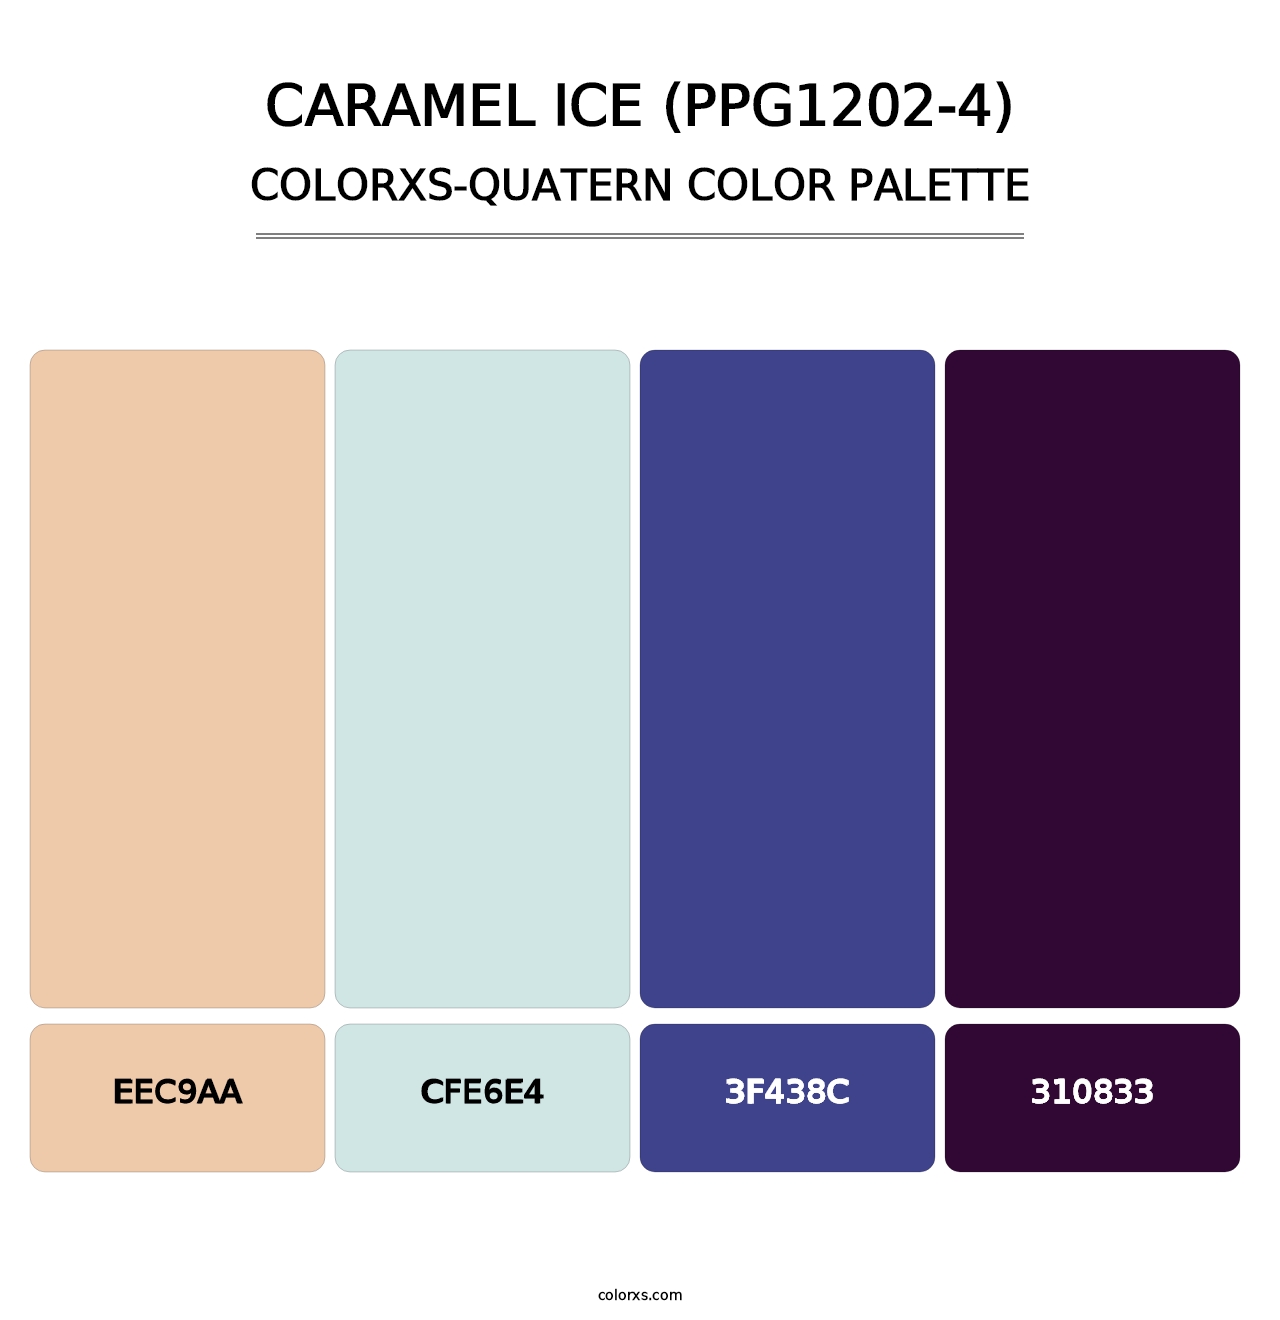 Caramel Ice (PPG1202-4) - Colorxs Quatern Palette